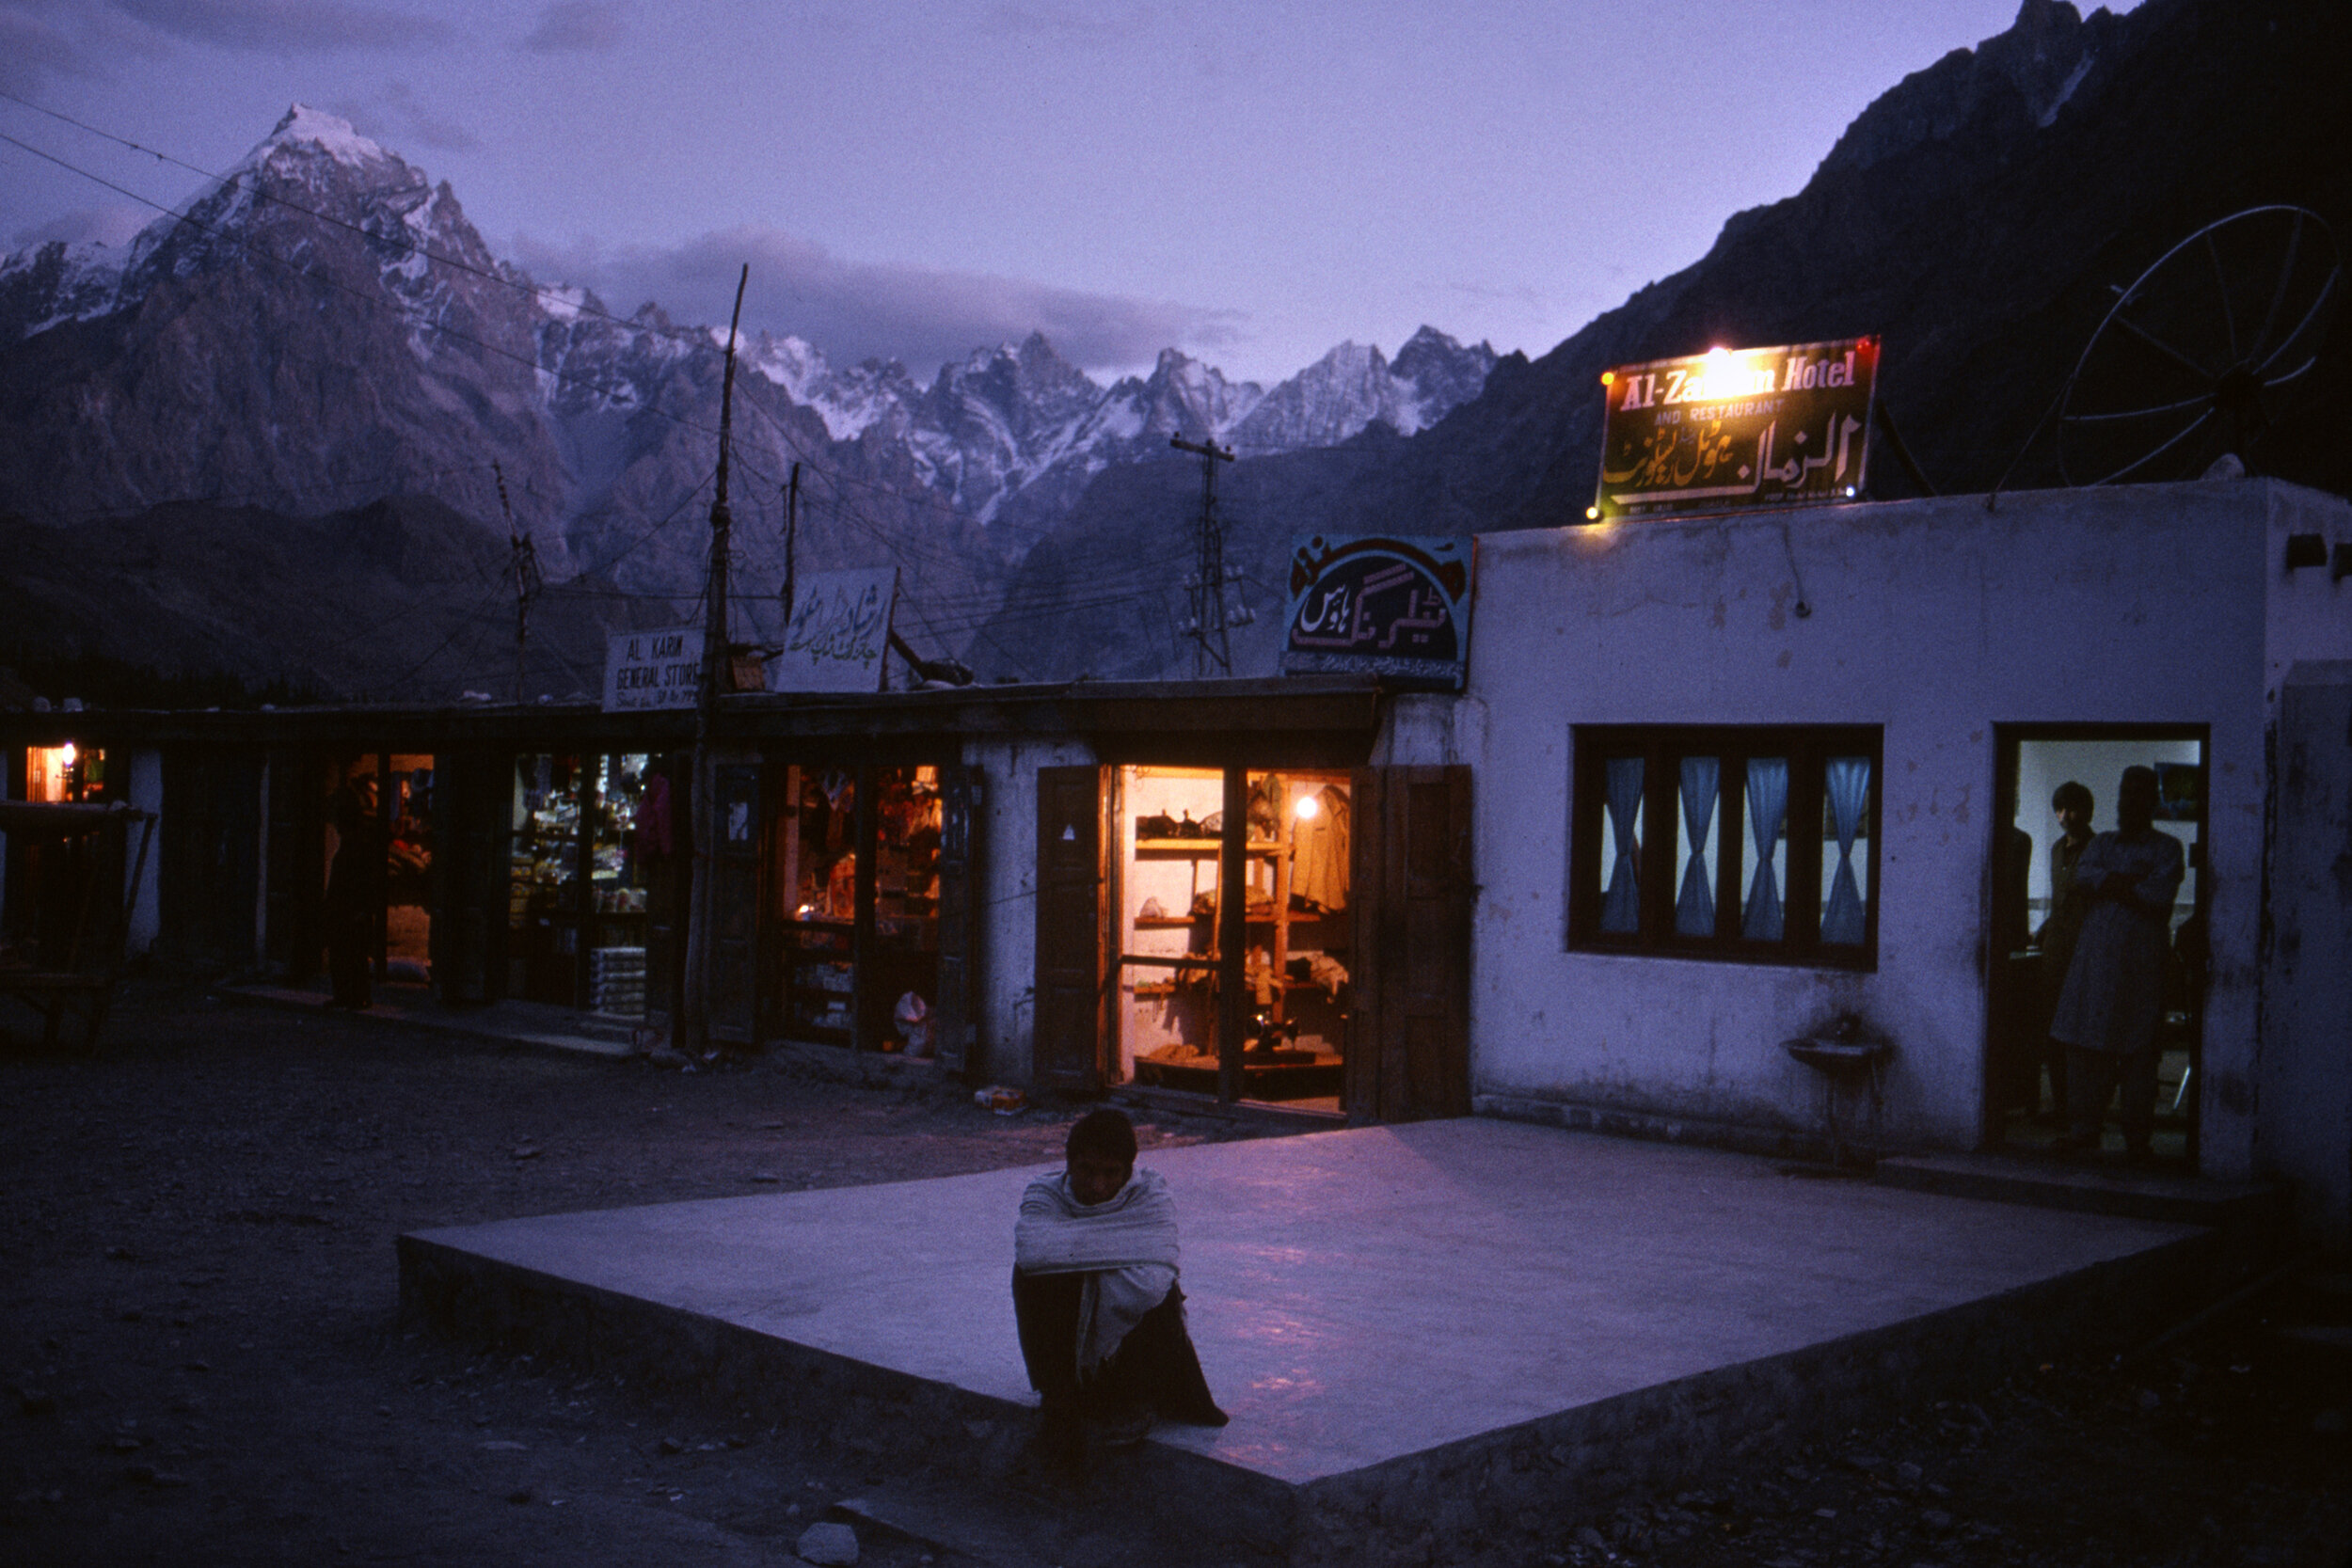  A traveler’s hotel along the Karakoram Highway near the border town of Sost, Pakistan. 1998 